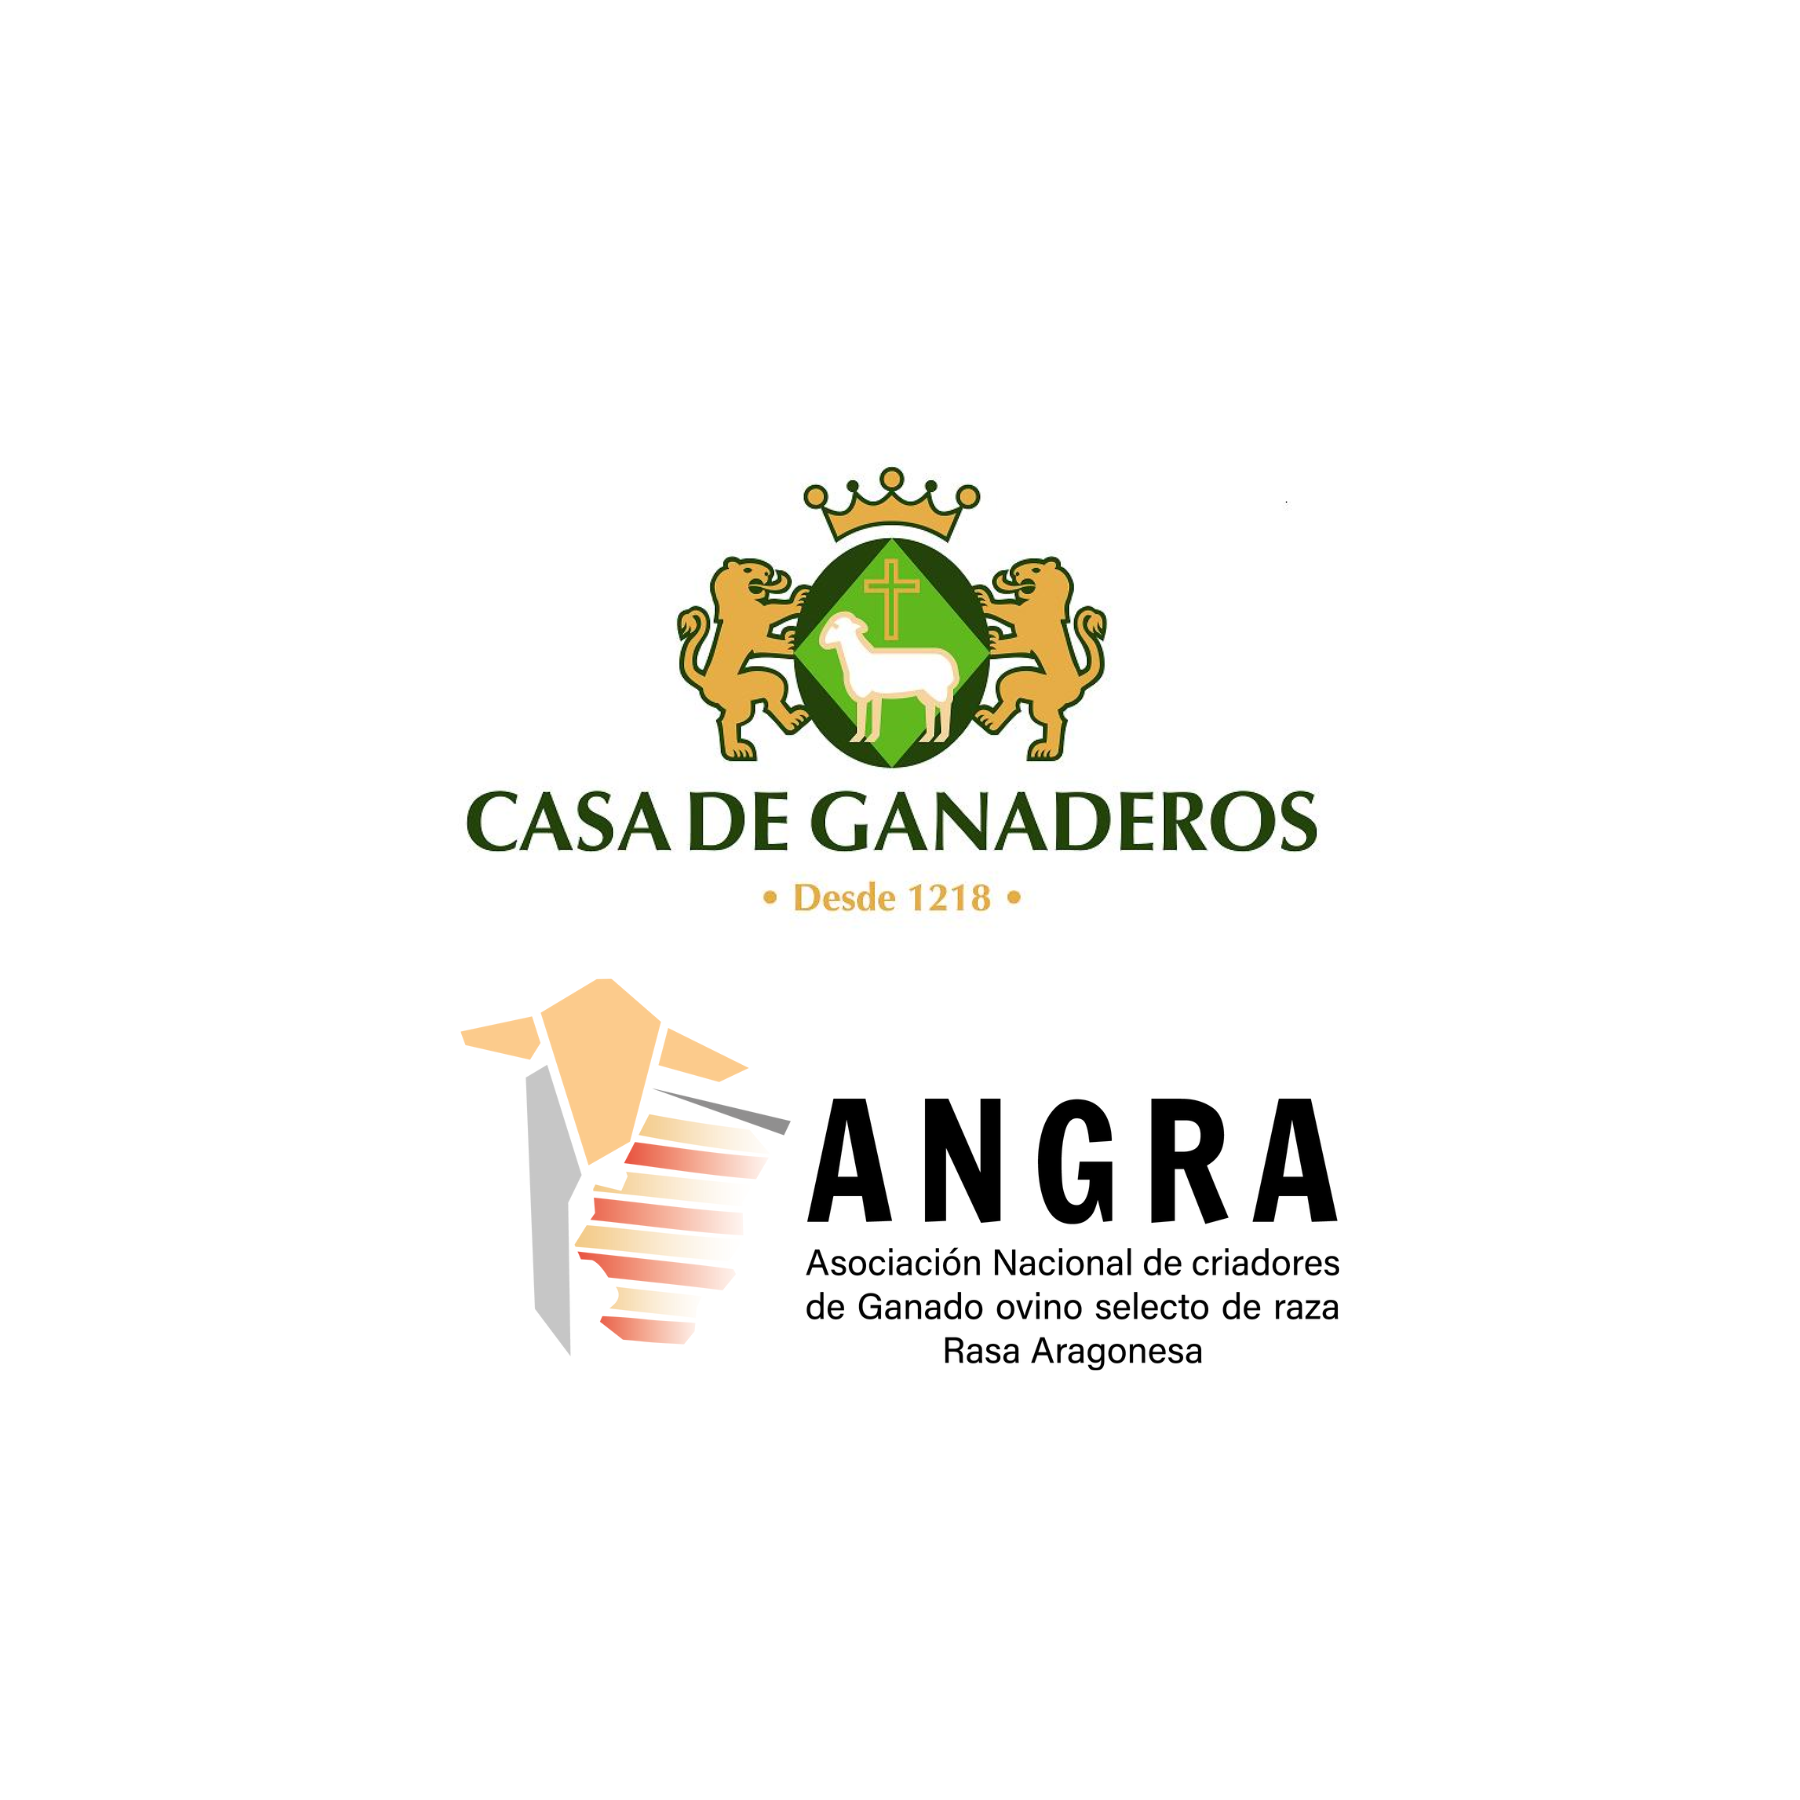 ANGRA / CASA DE GANADEROS DE ZARAGOZA